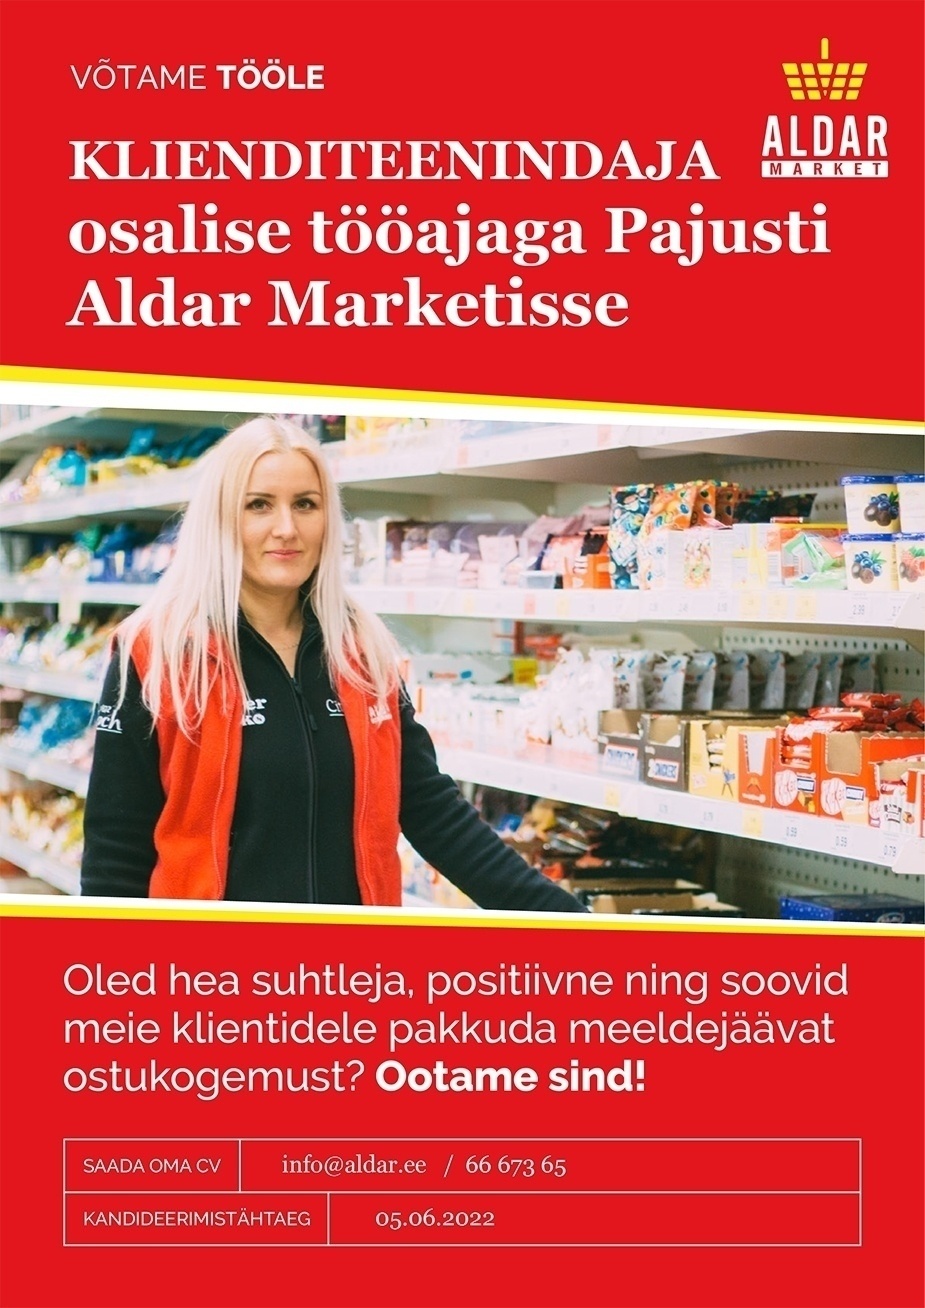 Aldar Eesti OÜ Klienditeenindaja Pajusti Aldar Marketisse